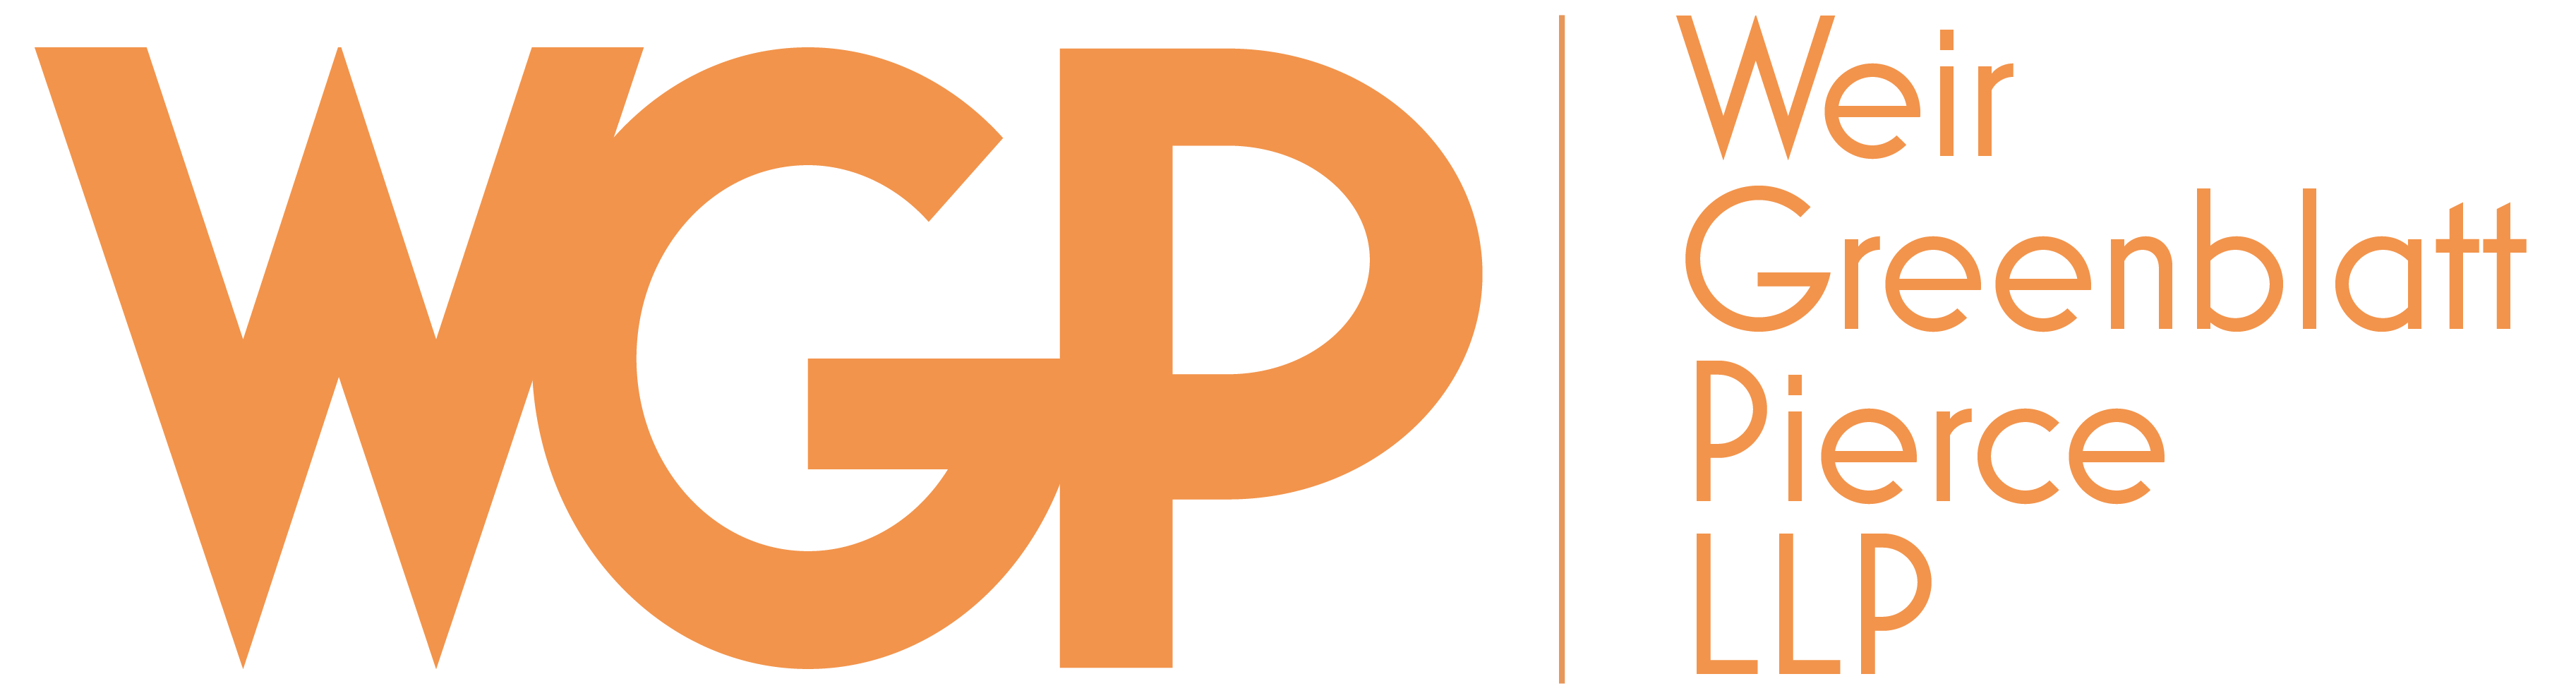 WGP logo Sub Page